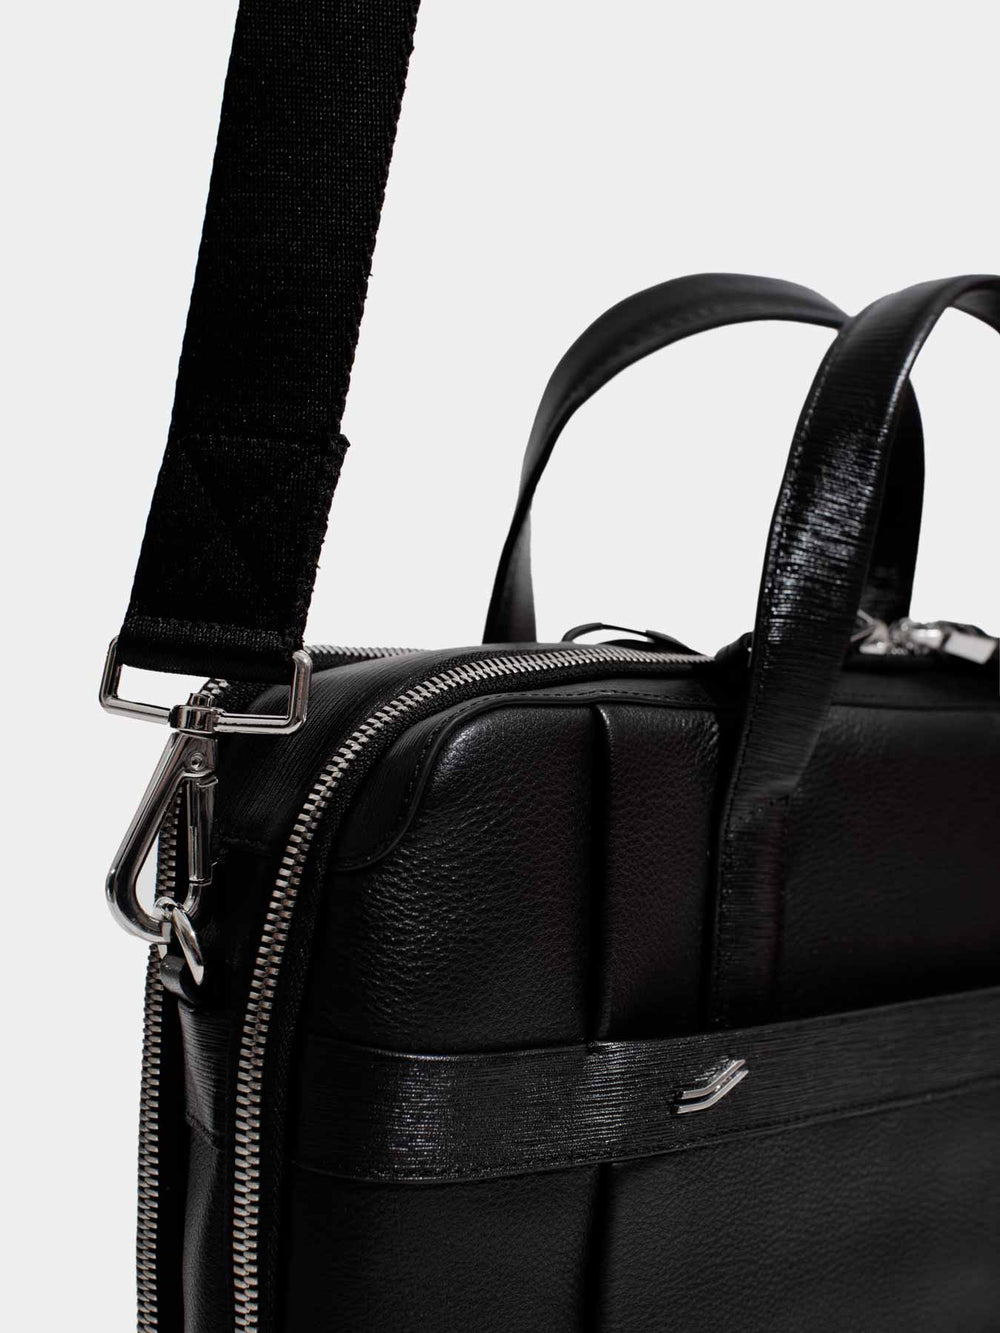 vocier briefcase medium details zipper black